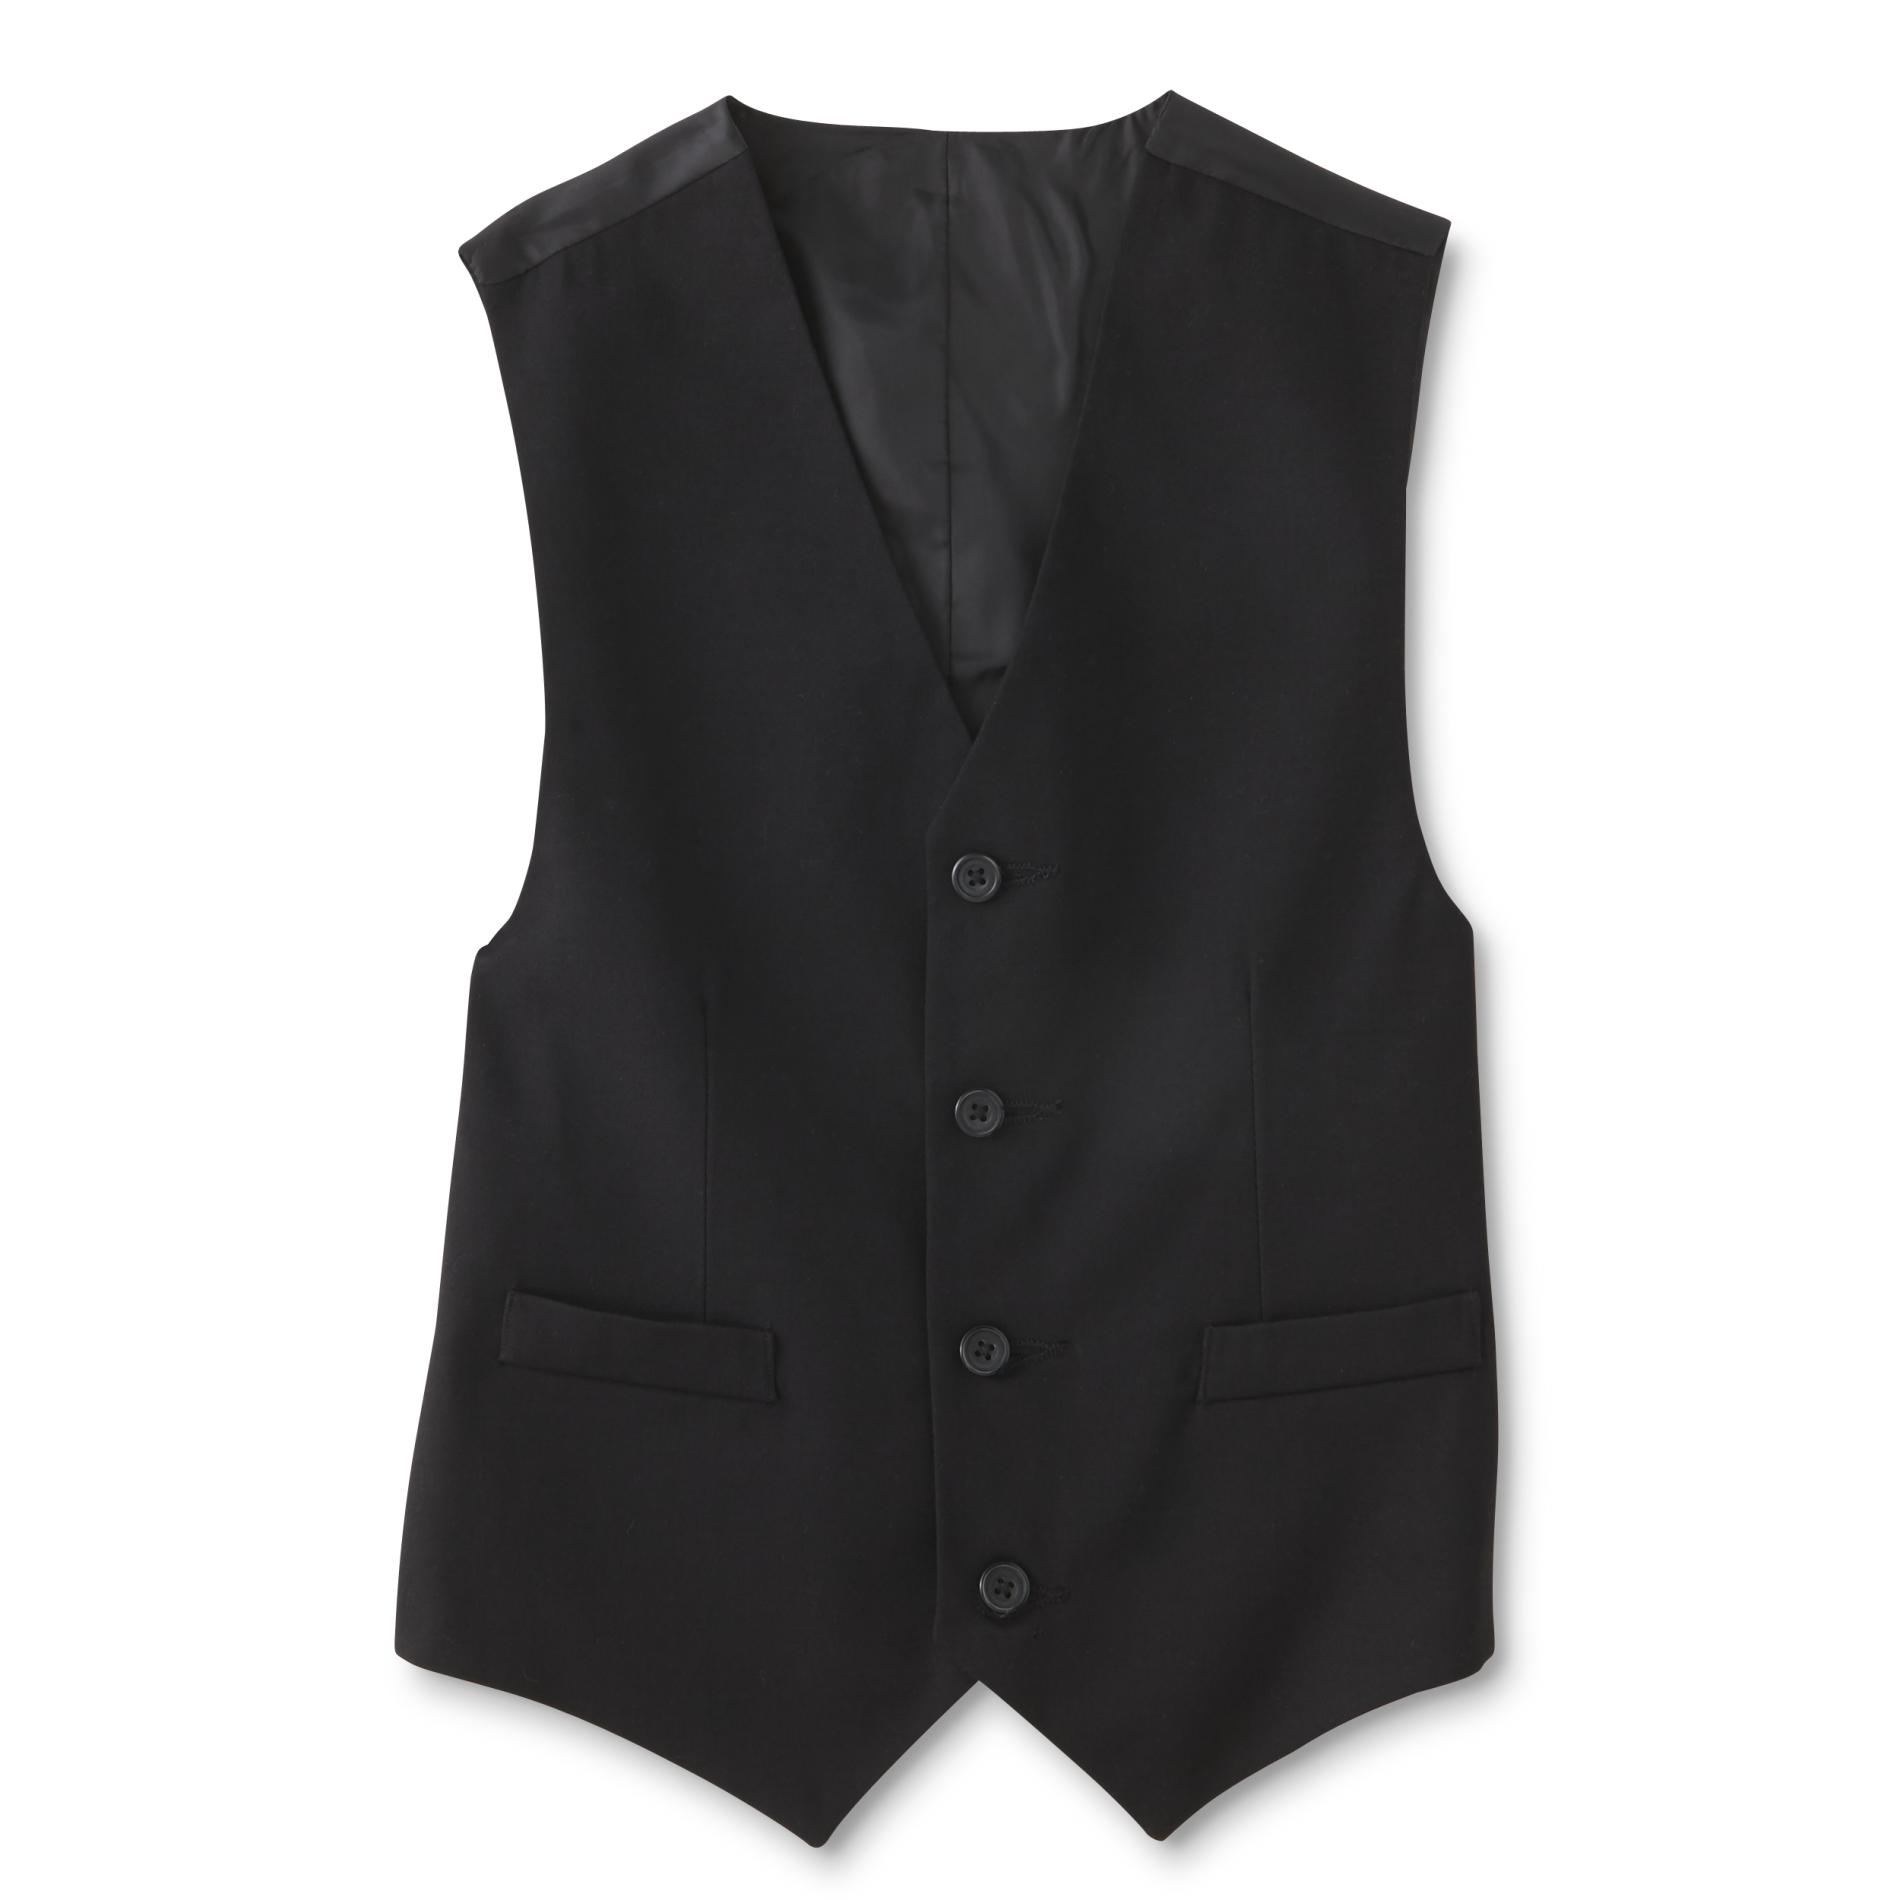 Dockers Boys' Reversible Dress Vest